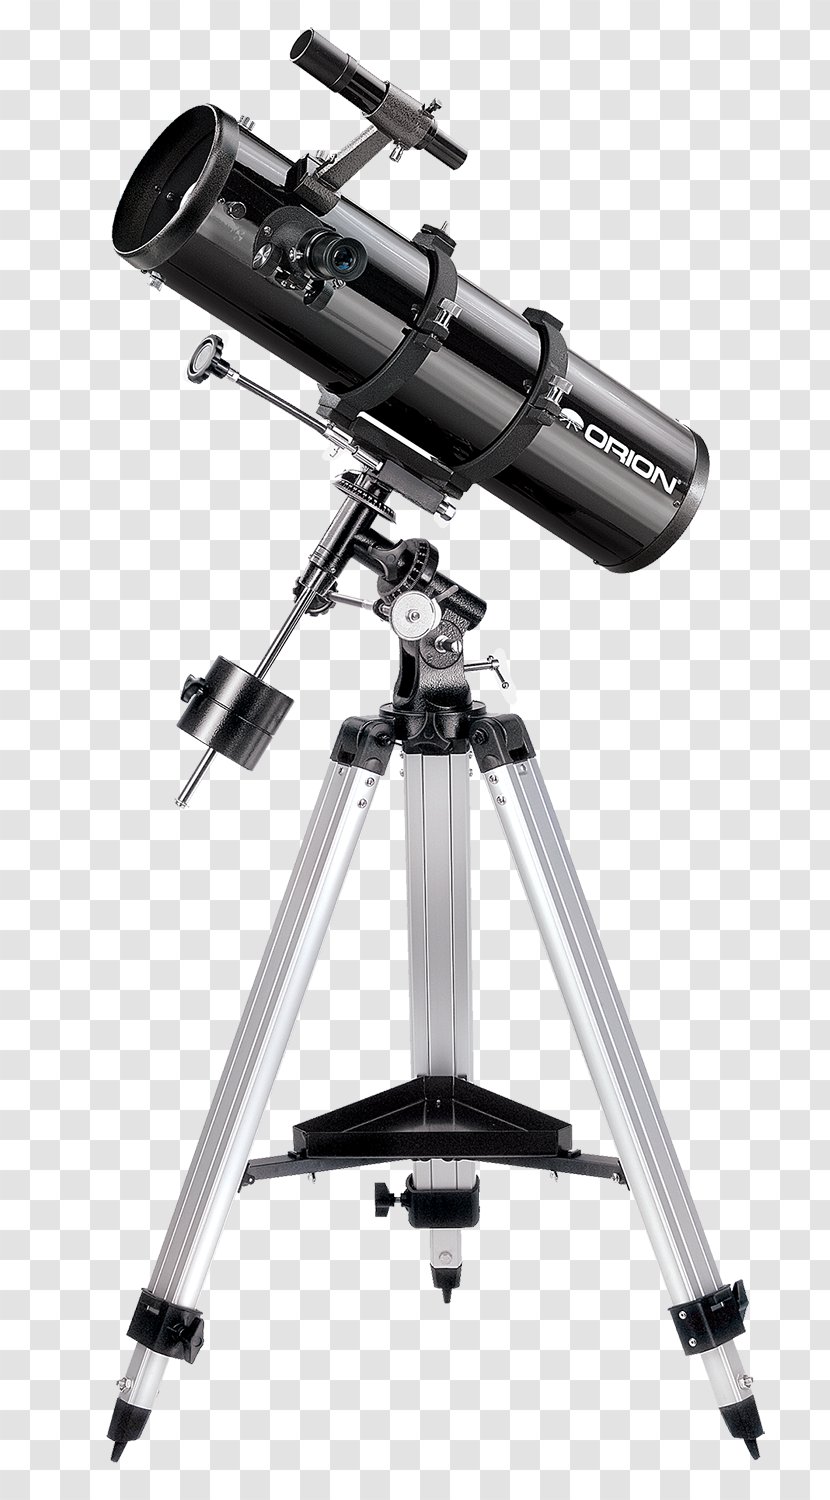 orion telescopes and binoculars